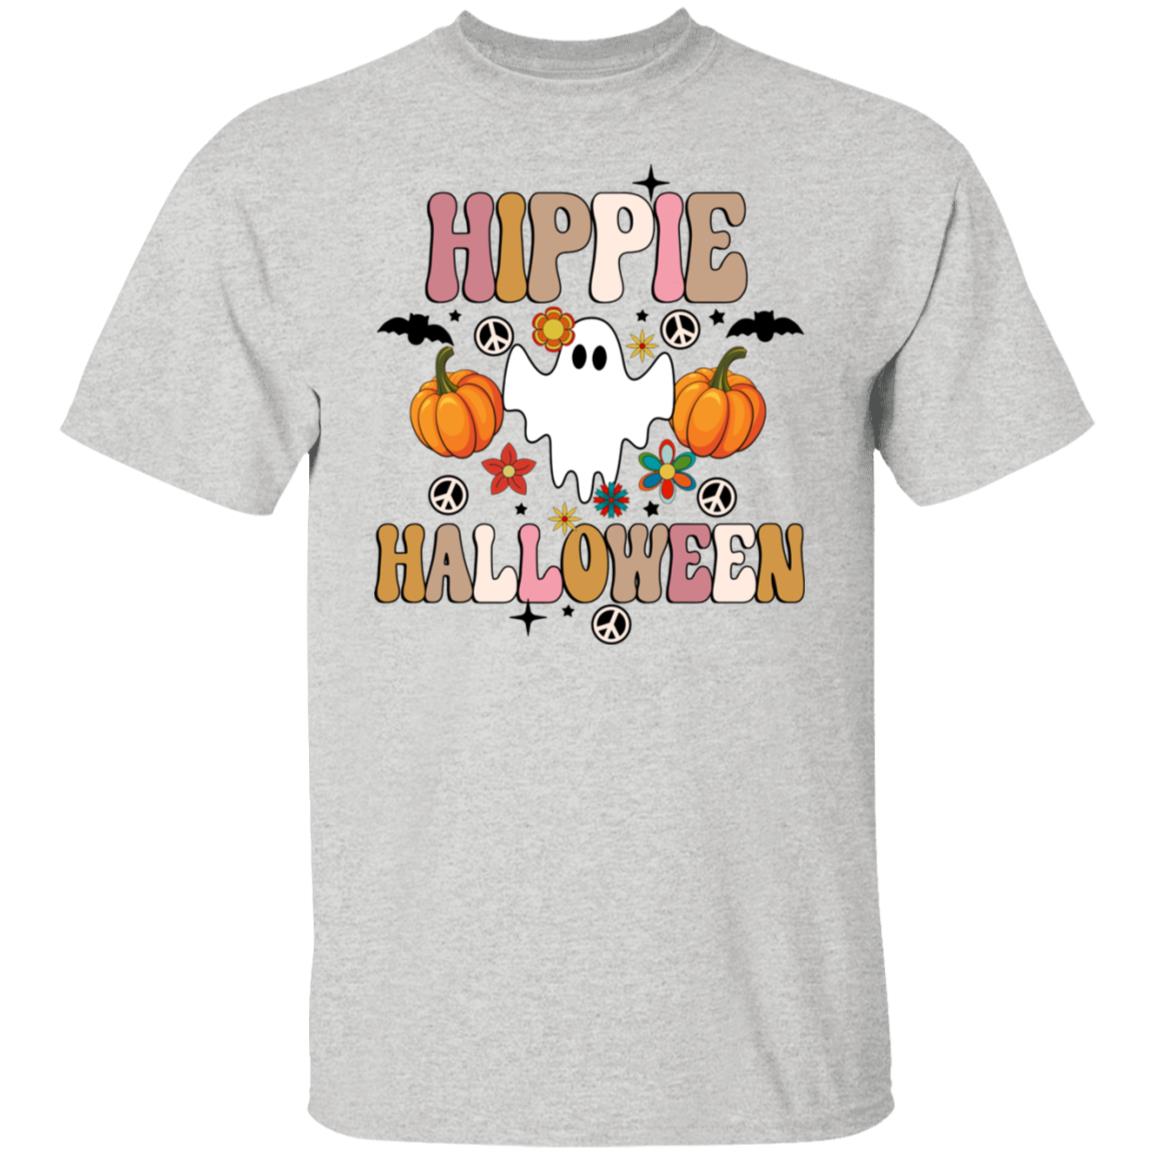 Hippie Halloween Funny Shirt